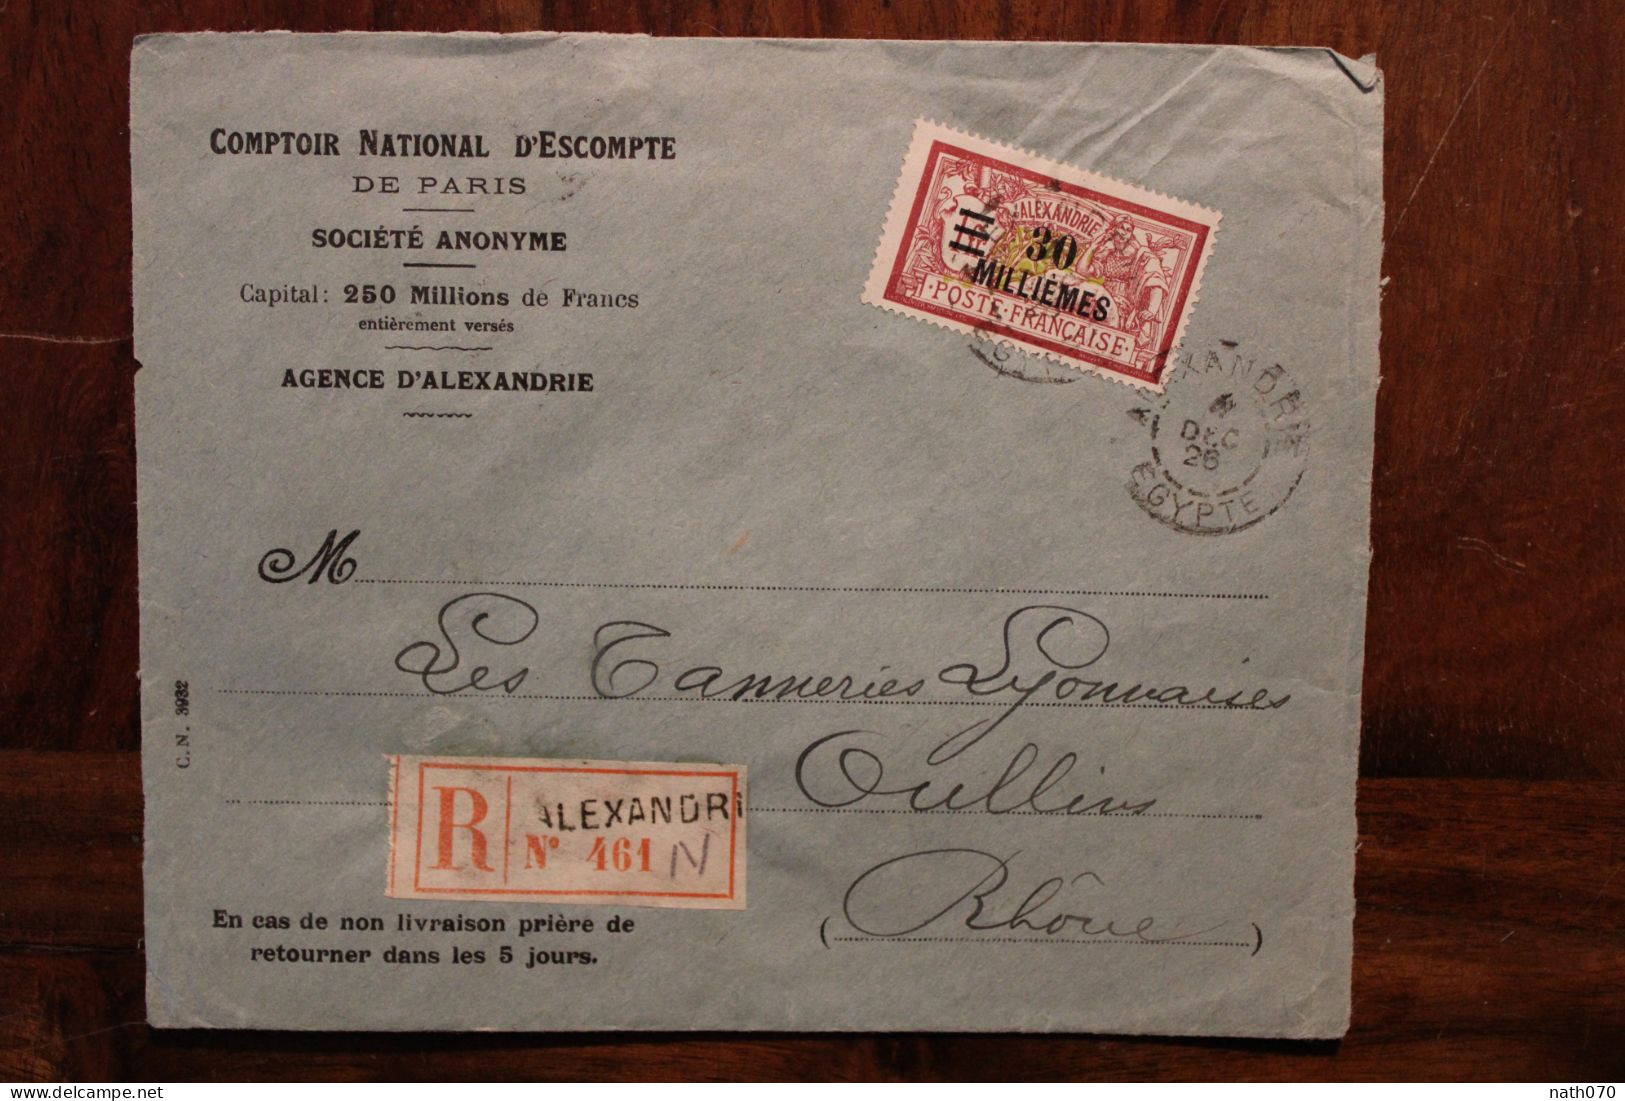 Alexandrie 1926 France Egypte Cover Egypt Ägypten Front D'enveloppe Recommandé Registered Reco R - Covers & Documents